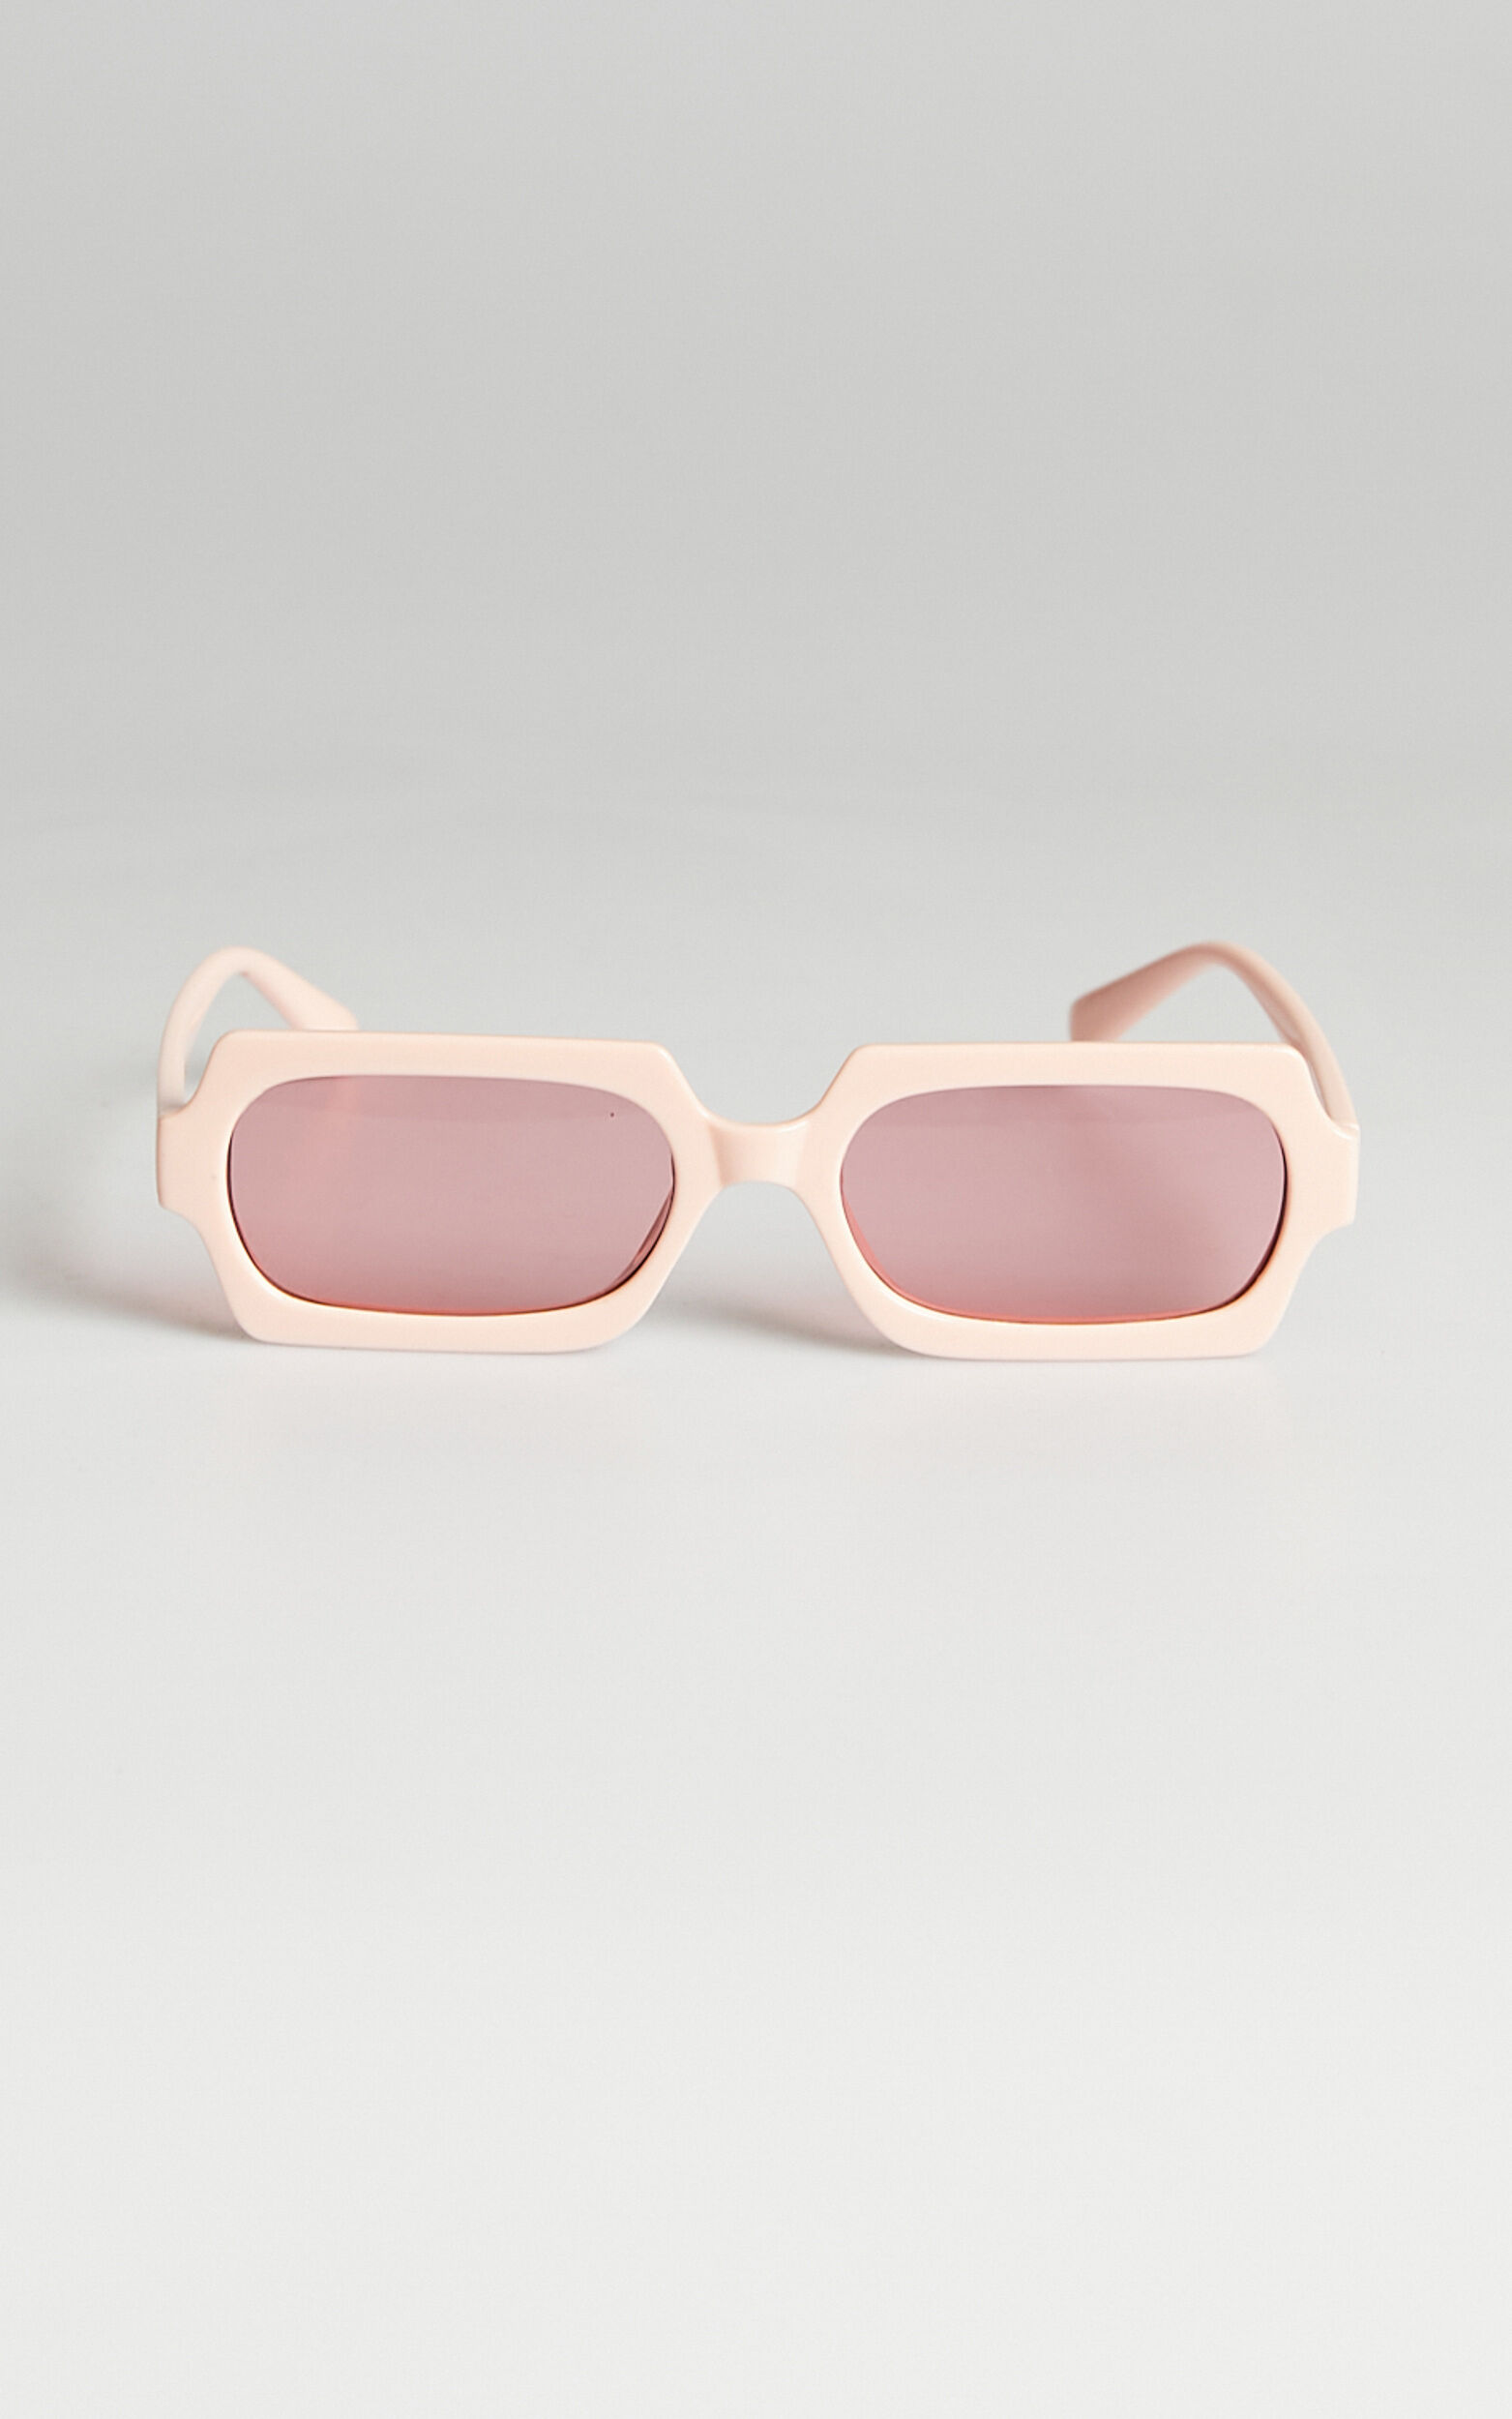 Keresen Sunglasses in Pink - NoSize, PNK1, super-hi-res image number null